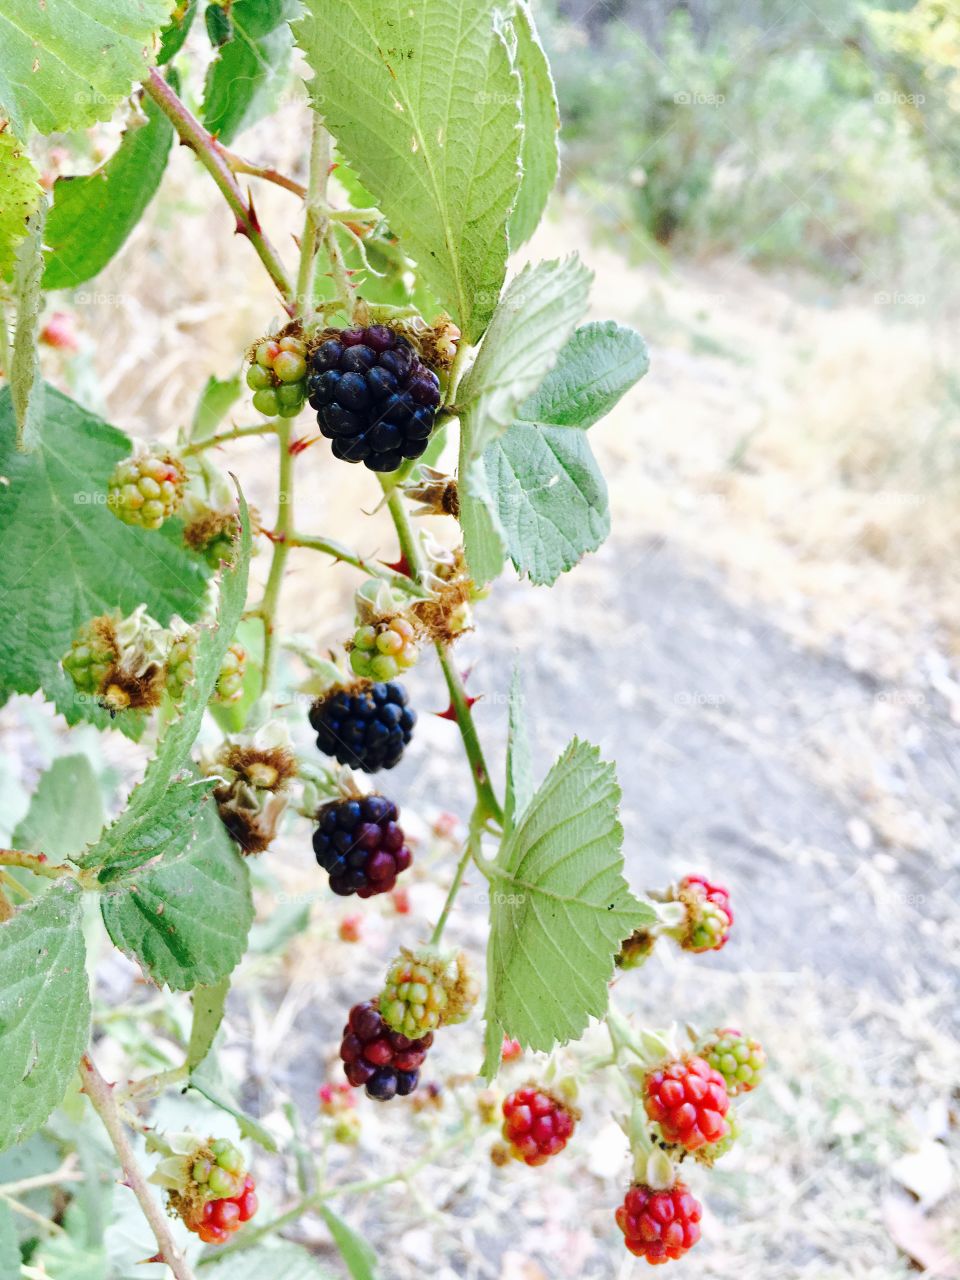 Yummy blackberries ! 